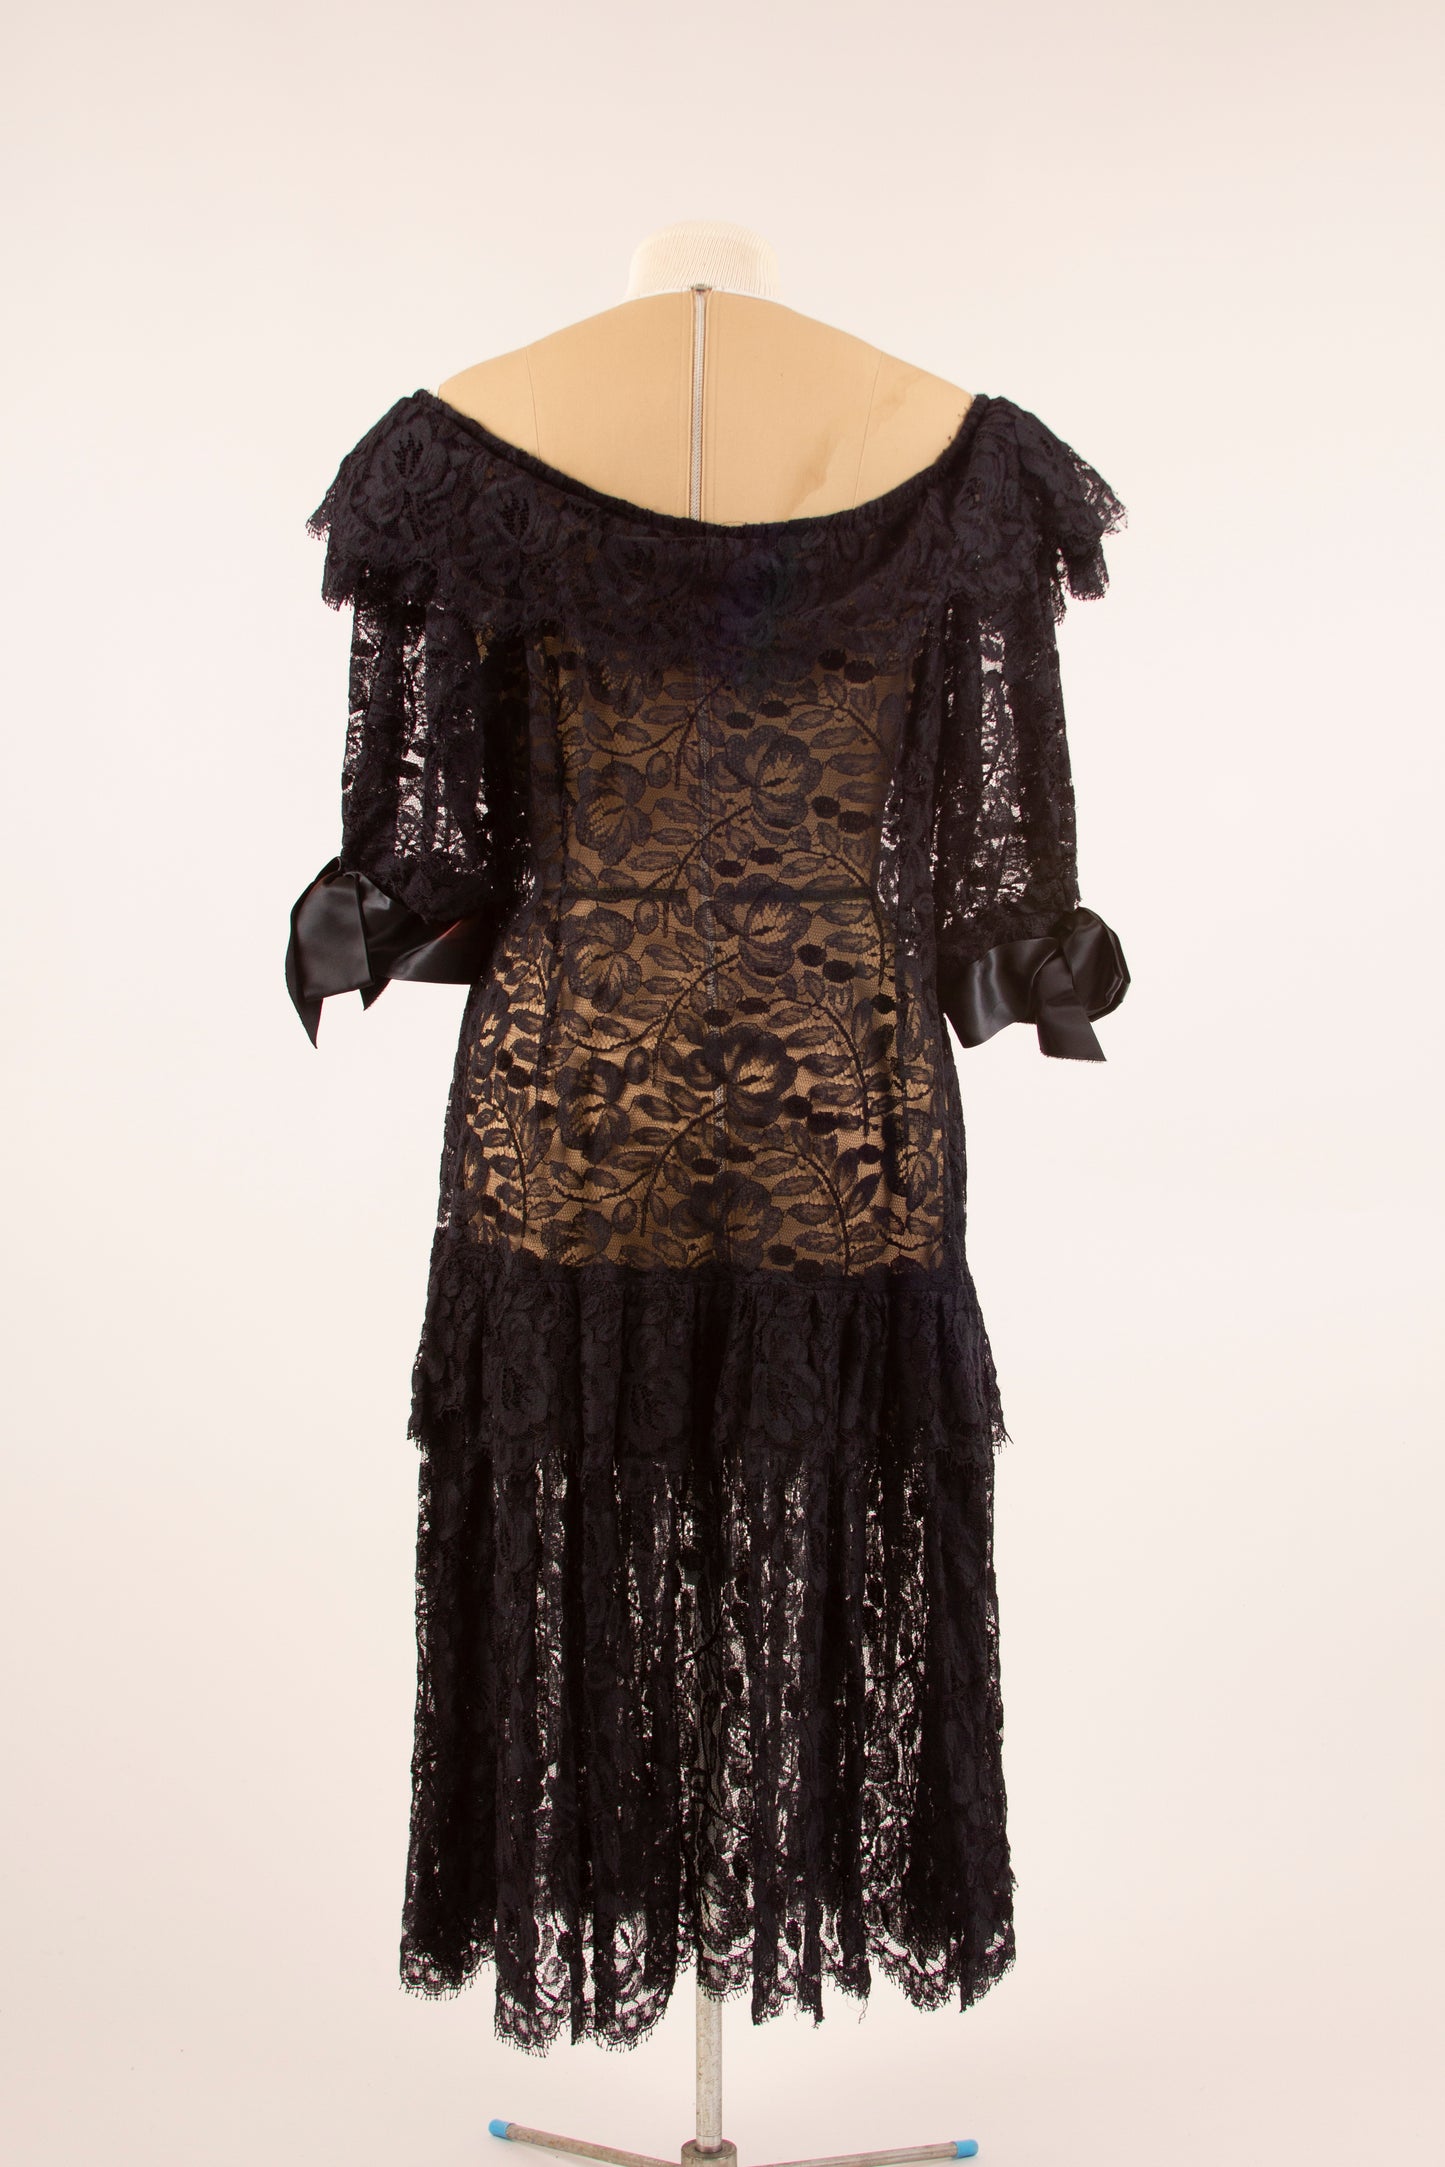 60’s Sheer Black Lace Dress L/XL